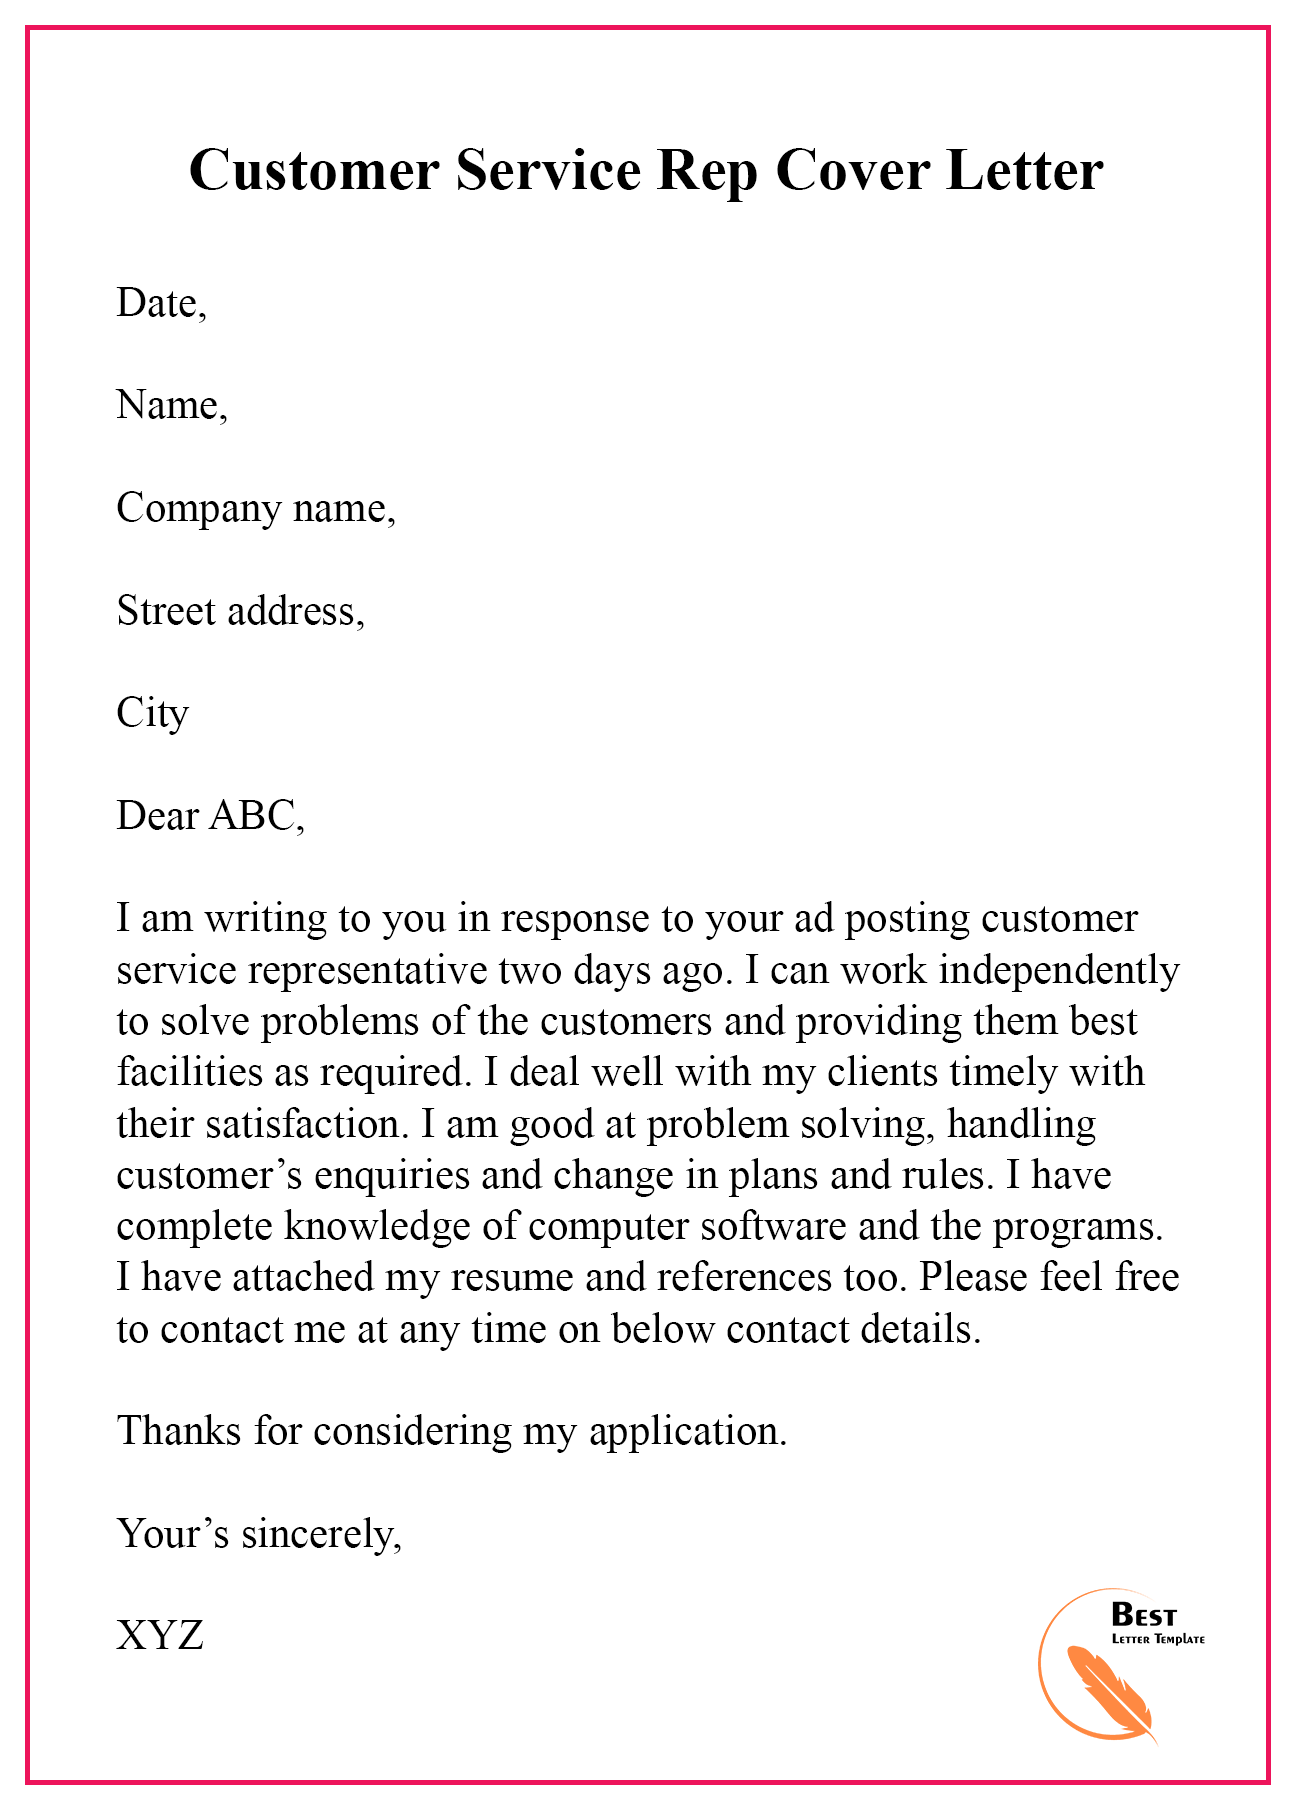 Customer Service Rep Cover Letter 